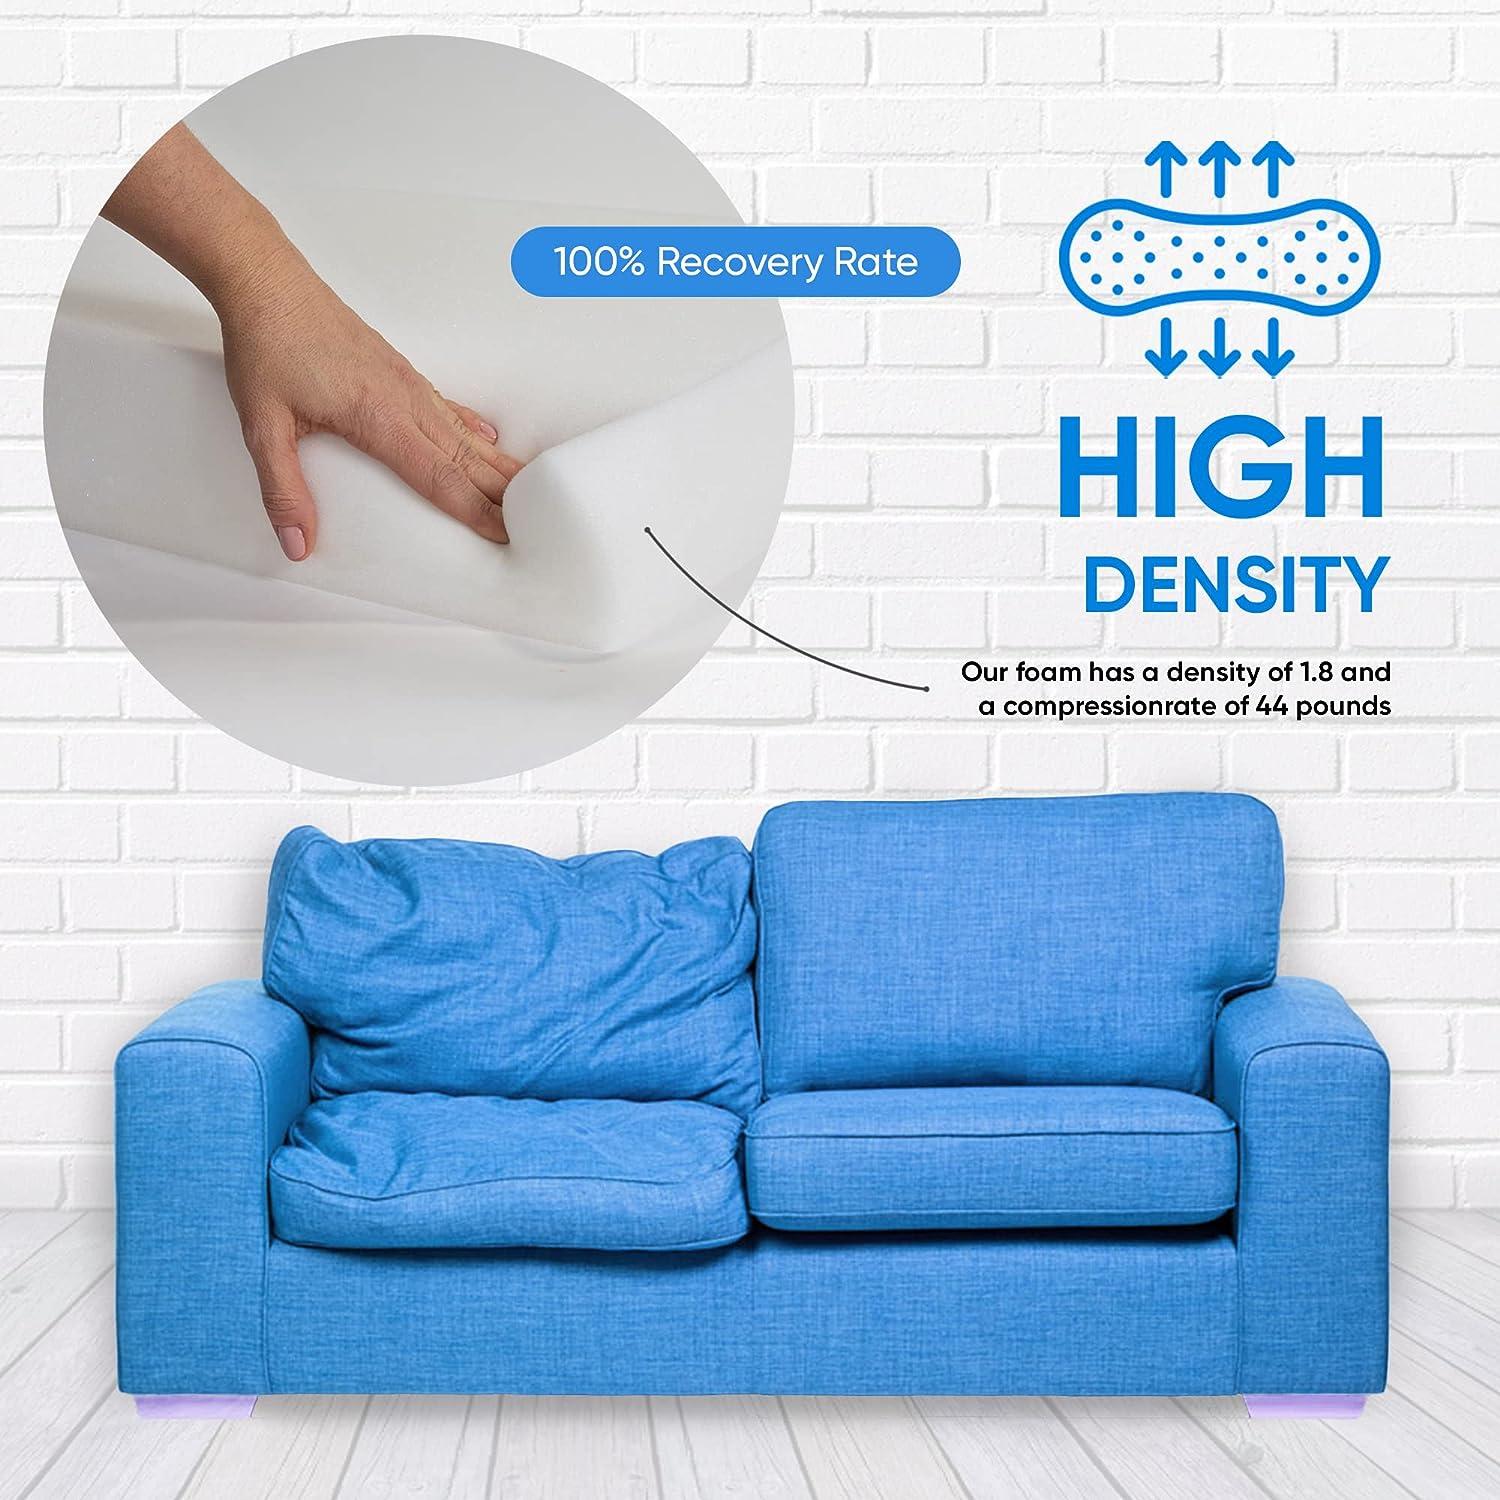 AK Trading Co. High Density Upholstery Foam Cushion, Polyurethane Foam Sheet - Made in USA - 5 H x 24 W x 72 L,White